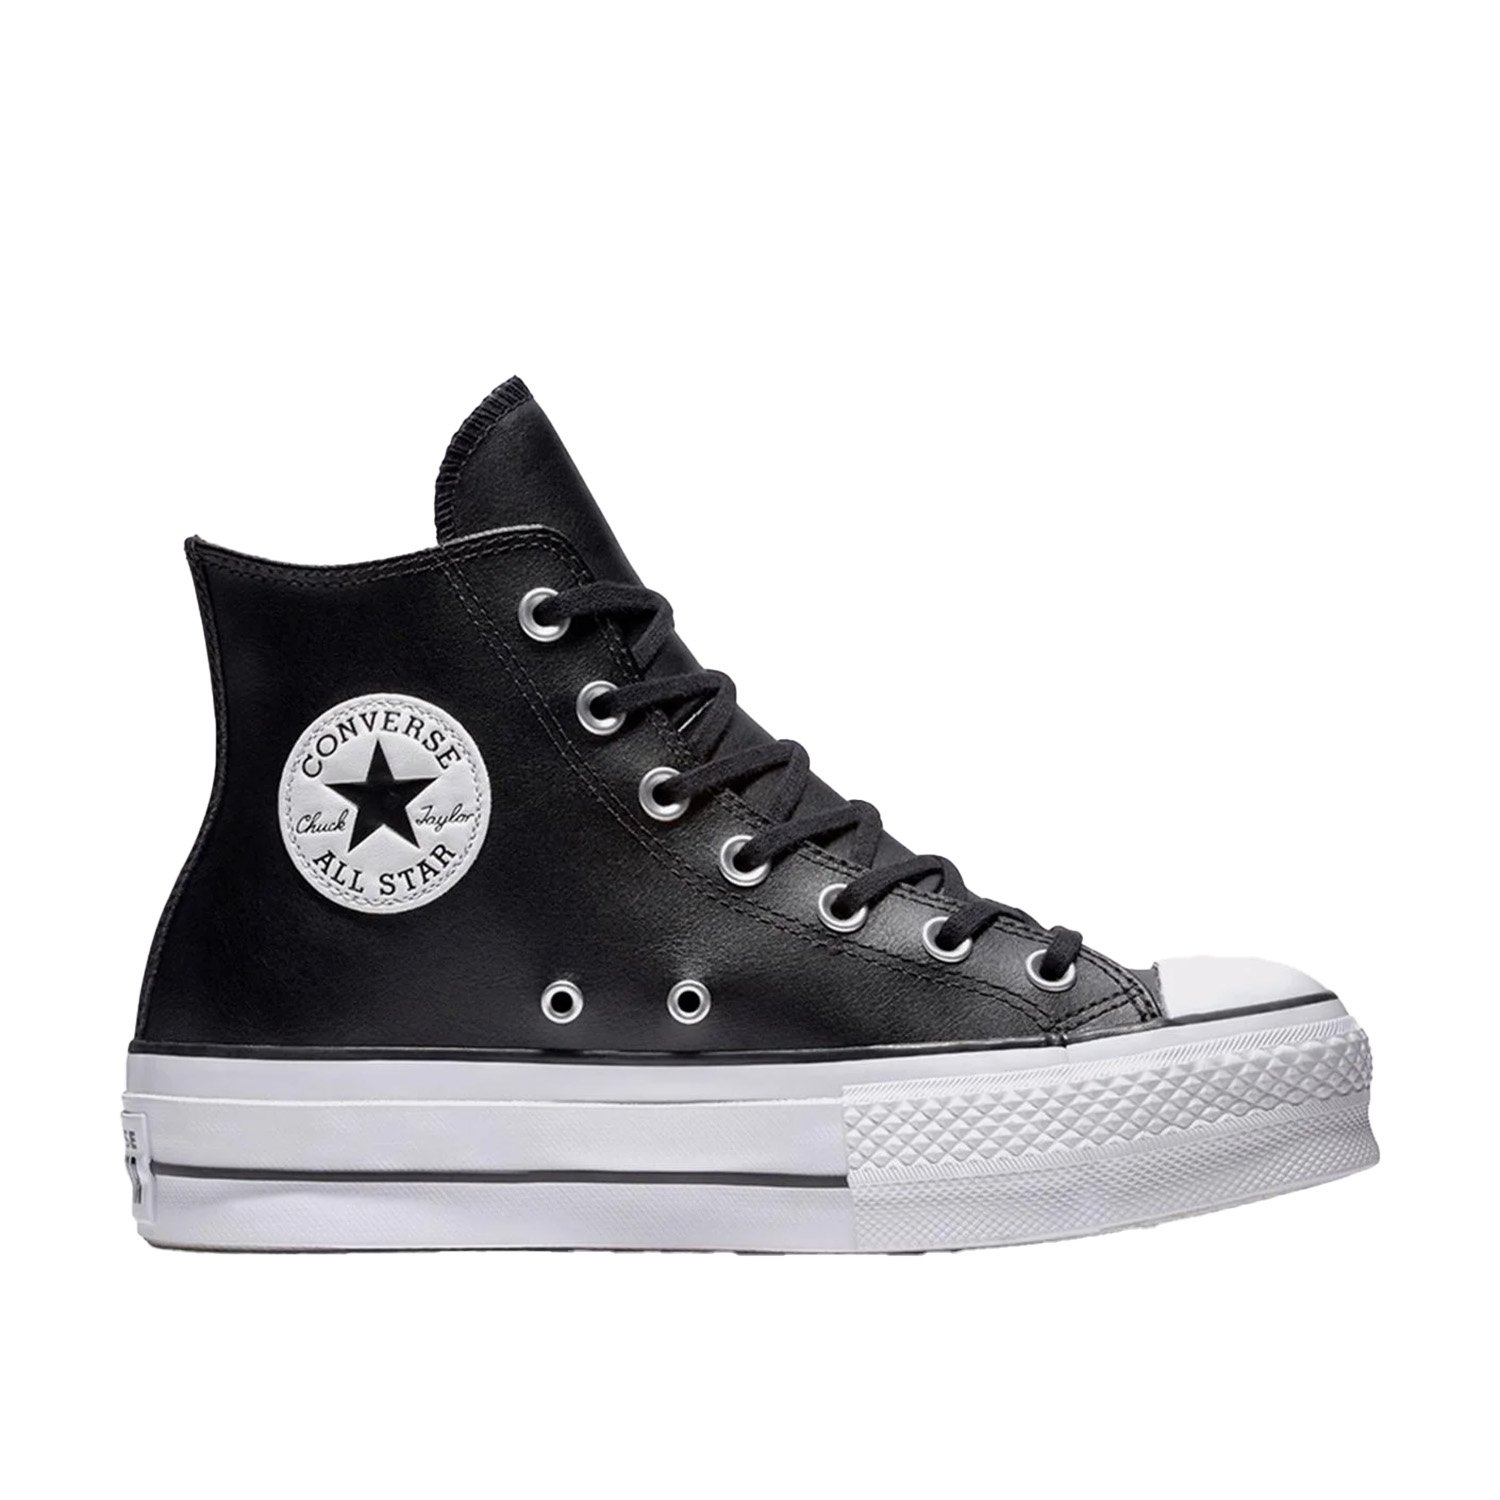 Converse Chuck Taylor All Star Leather Platform Kadın Ayakkabı - Siyah - 1